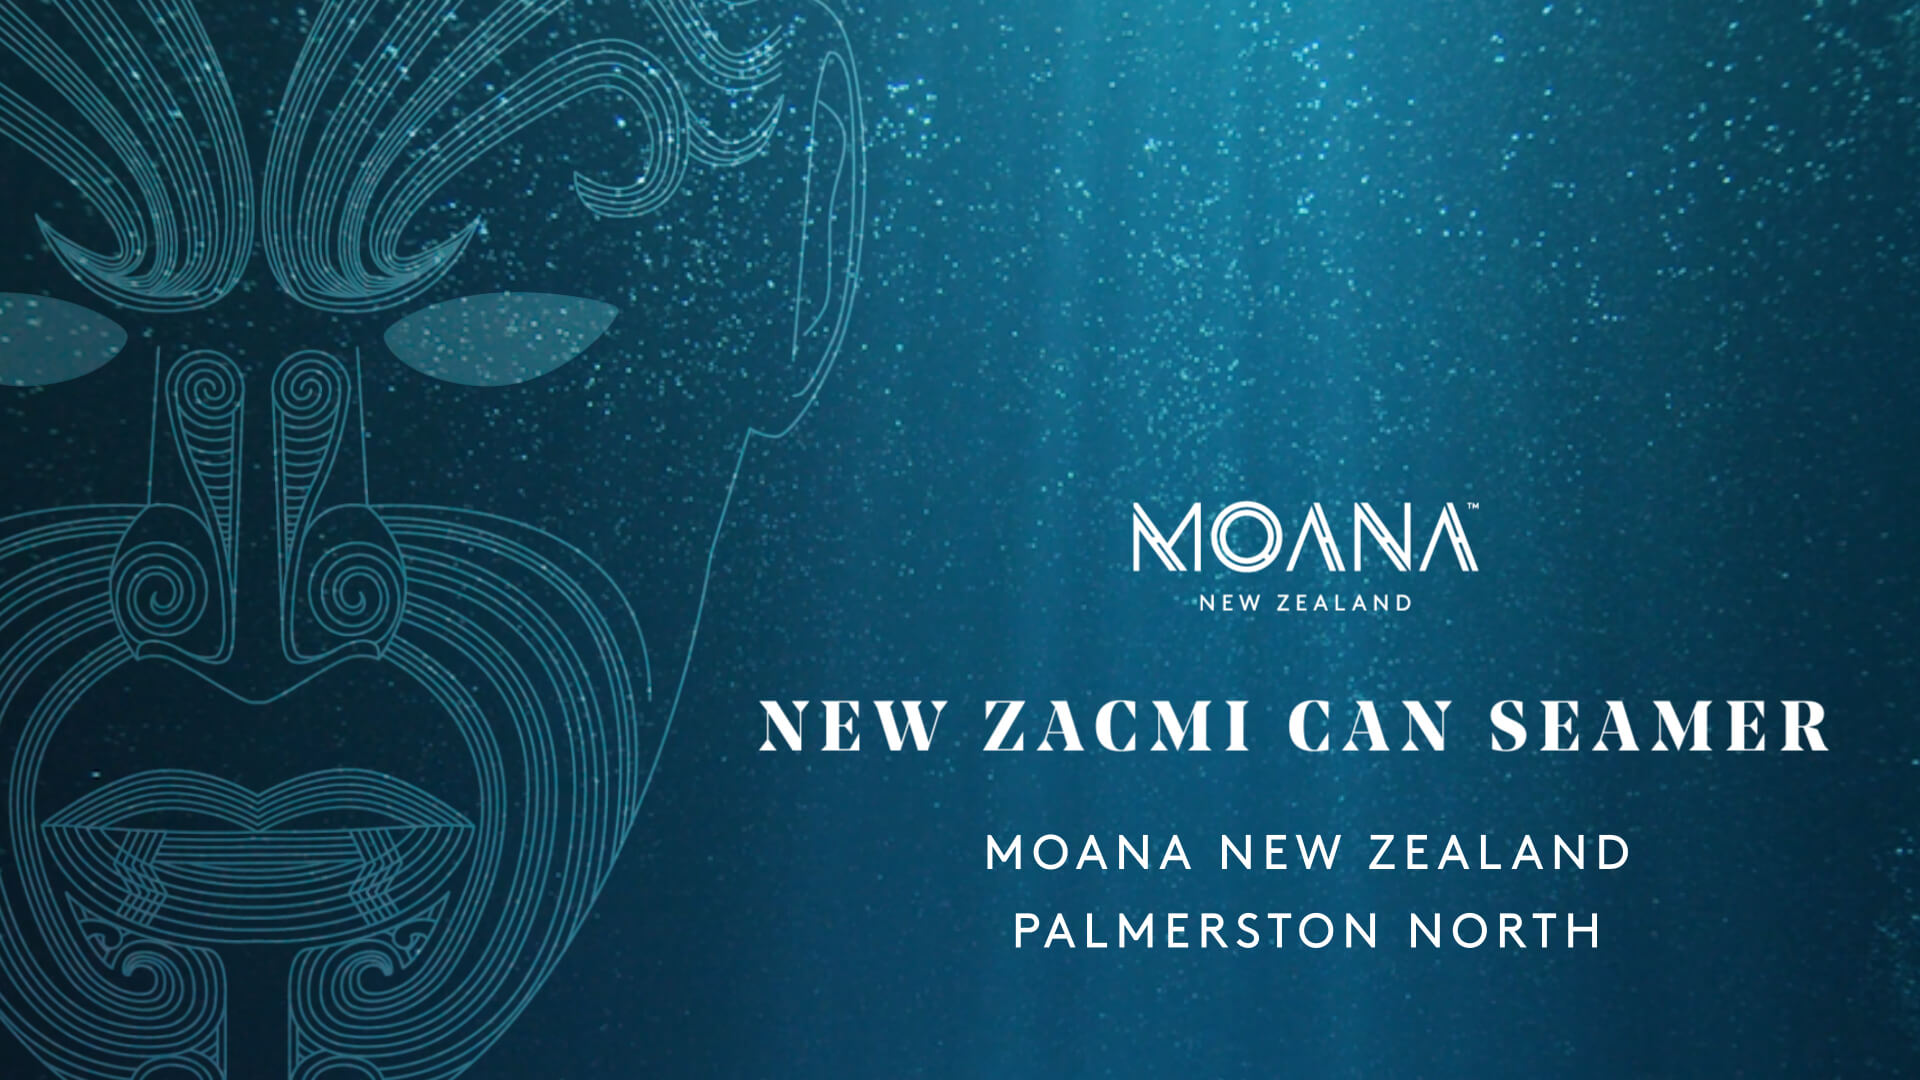 Zacmi can seamer at Moana New Zealand Palmerston North